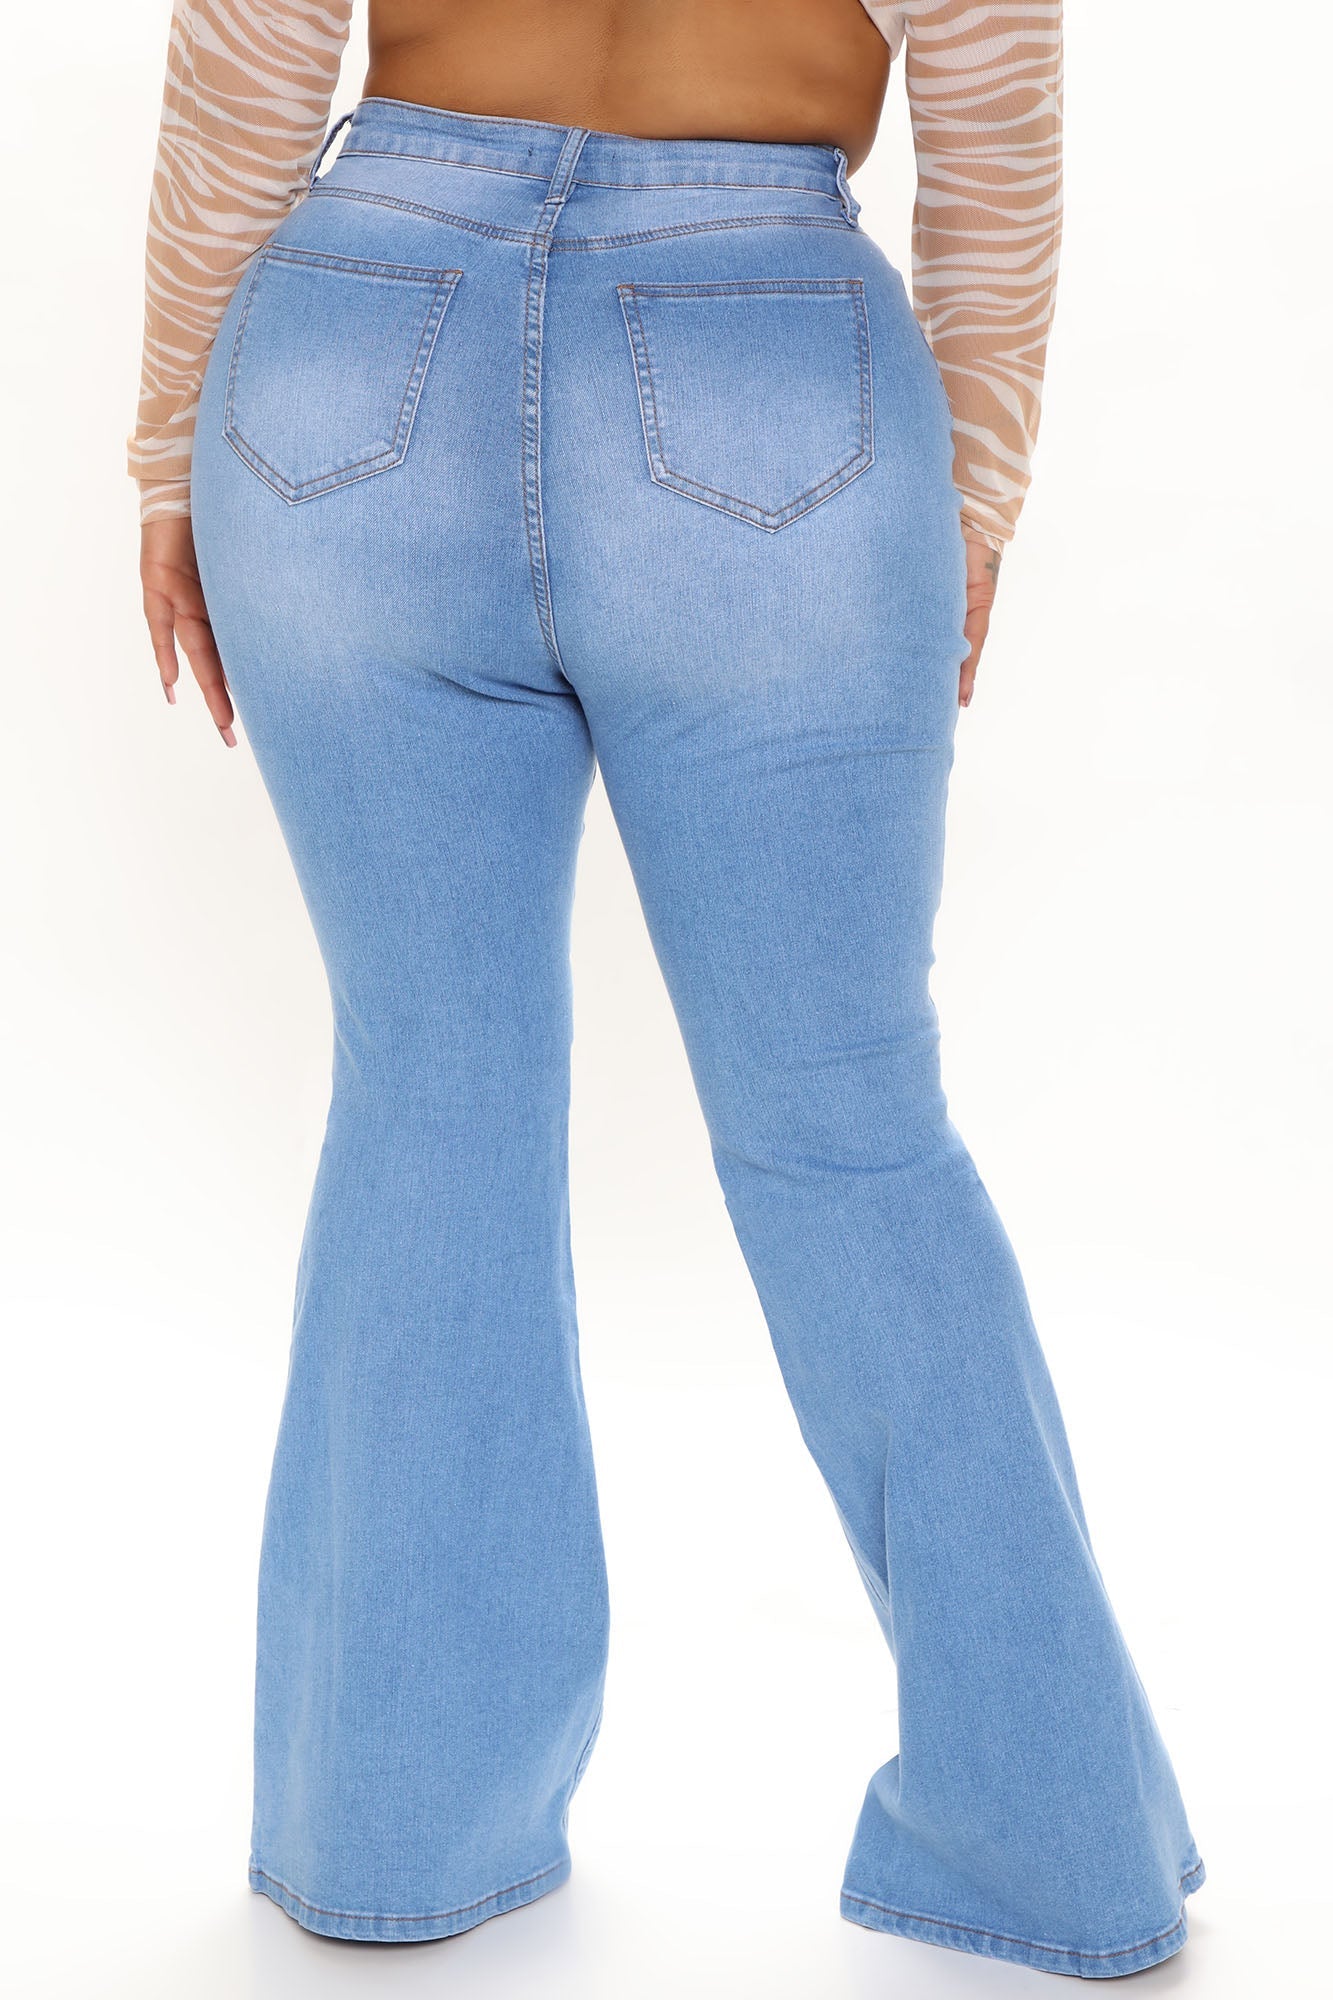 She's Got Flair Distressed Super Stretch Jeans - Light Blue Wash ...